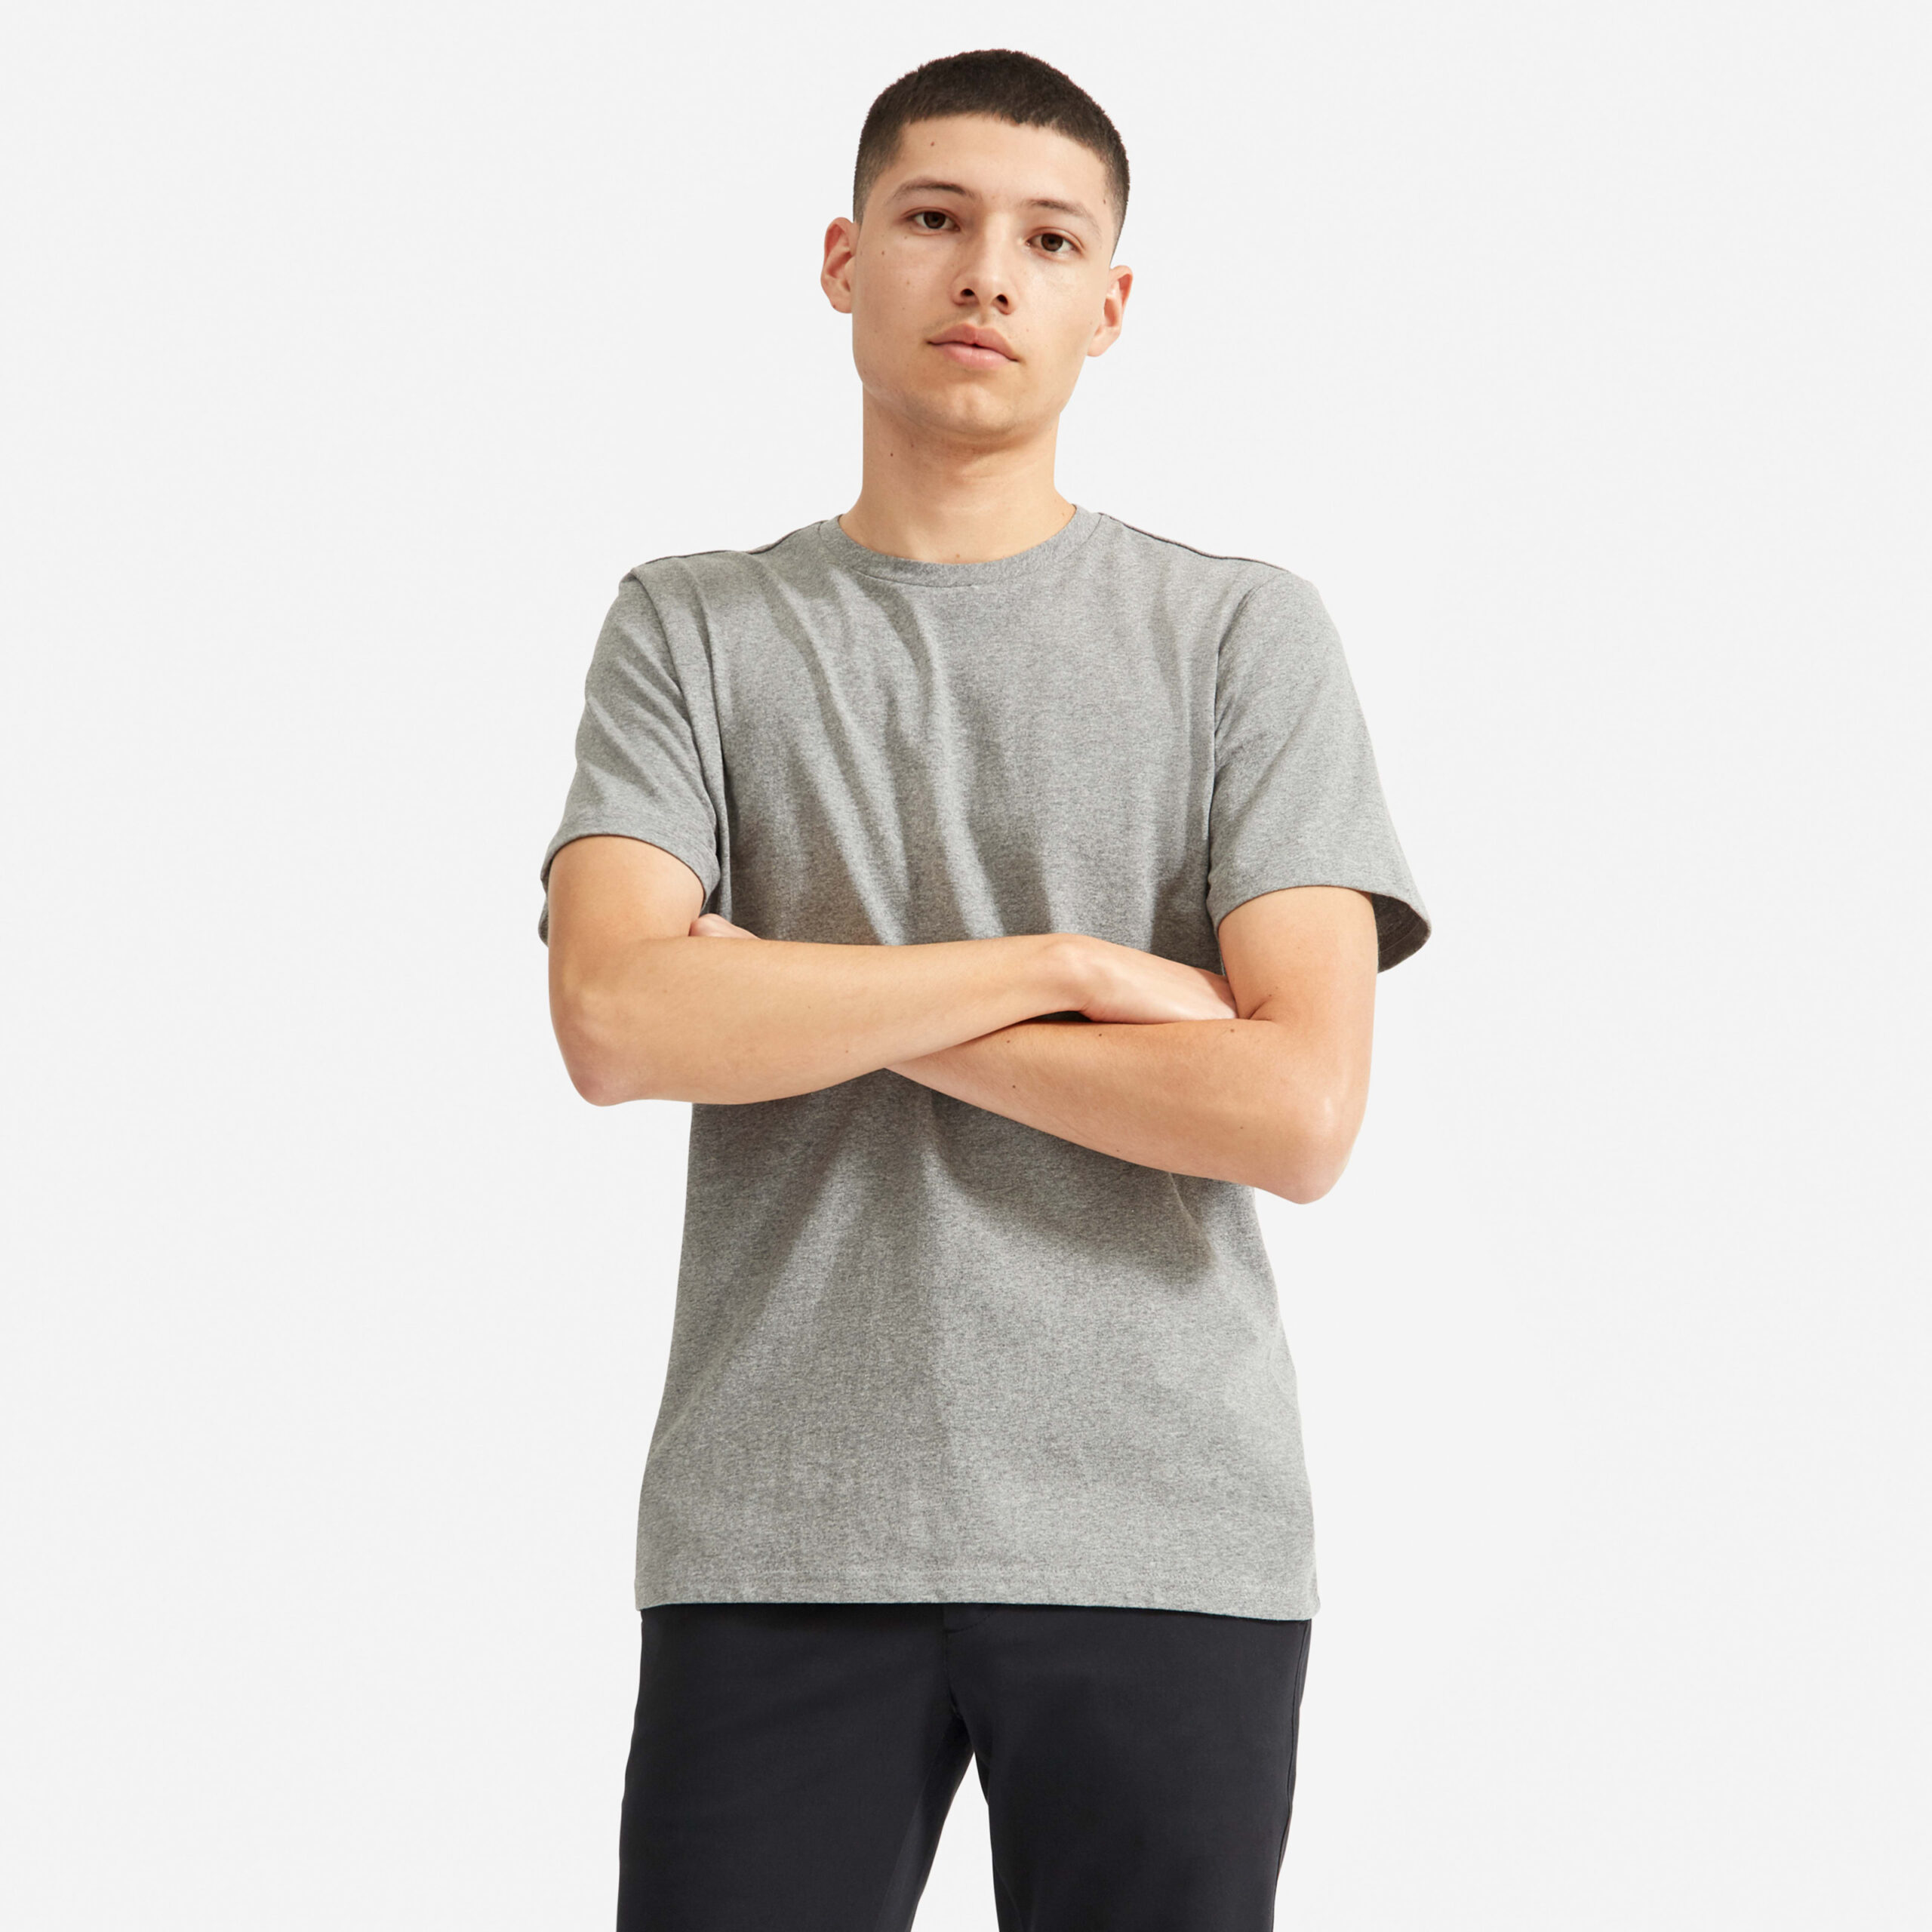 Men&#8217;s Premium-Weight Crew | Uniform T-Shirt by Everlane in Mid Heathered Grey